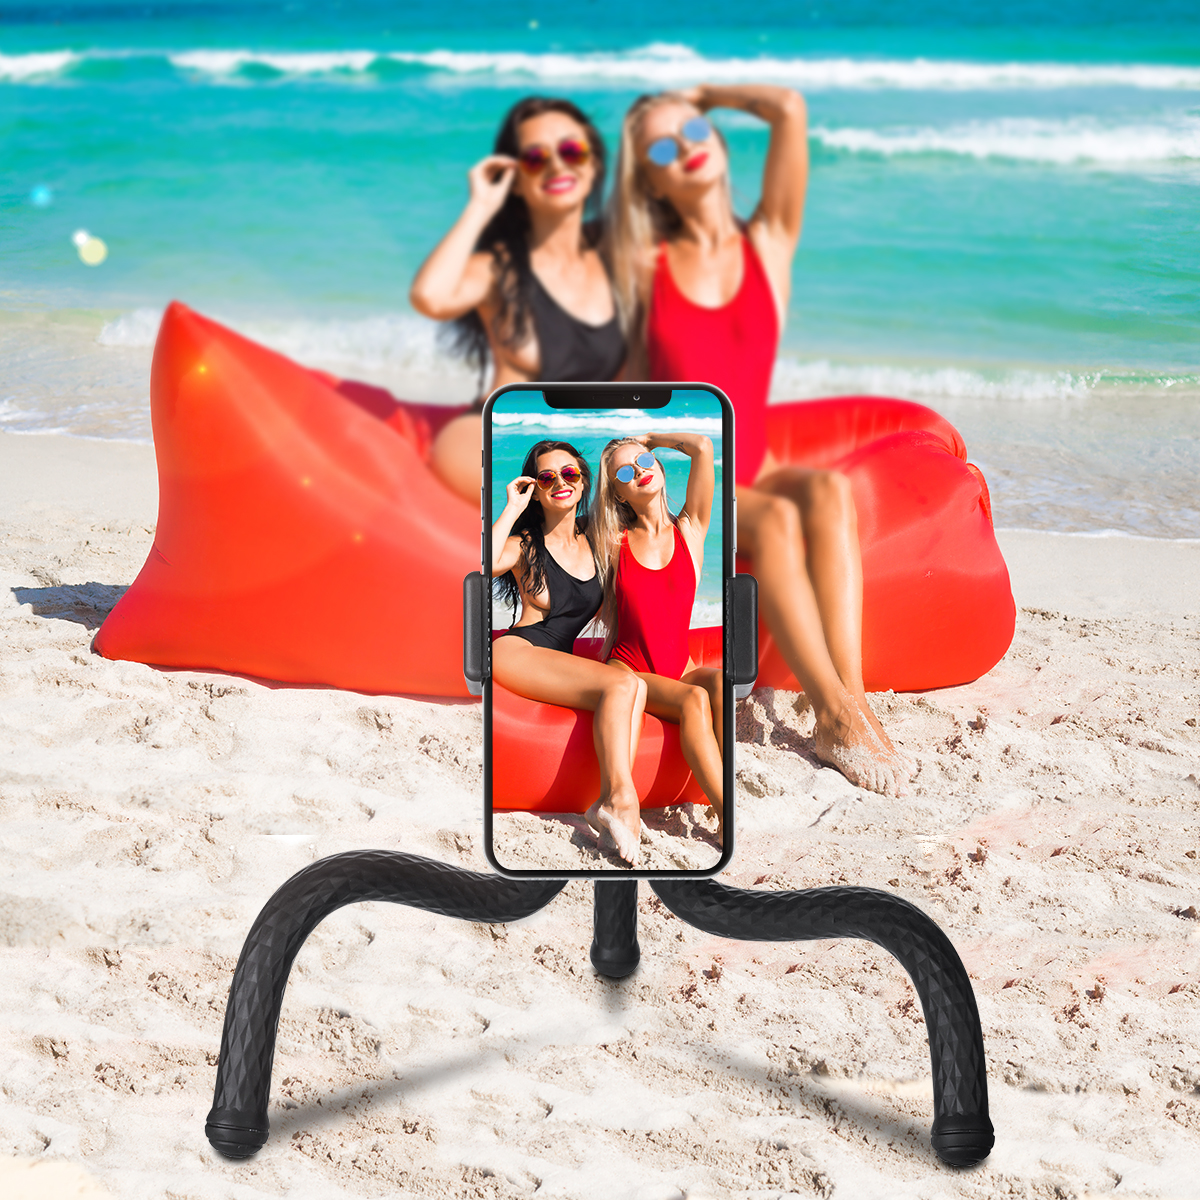 Bakeey-360deg-Rotating-Universal-Flexible-Protable-Travel-Octopus-Live-Broadcasting-Selfie-Photograp-1635121-3